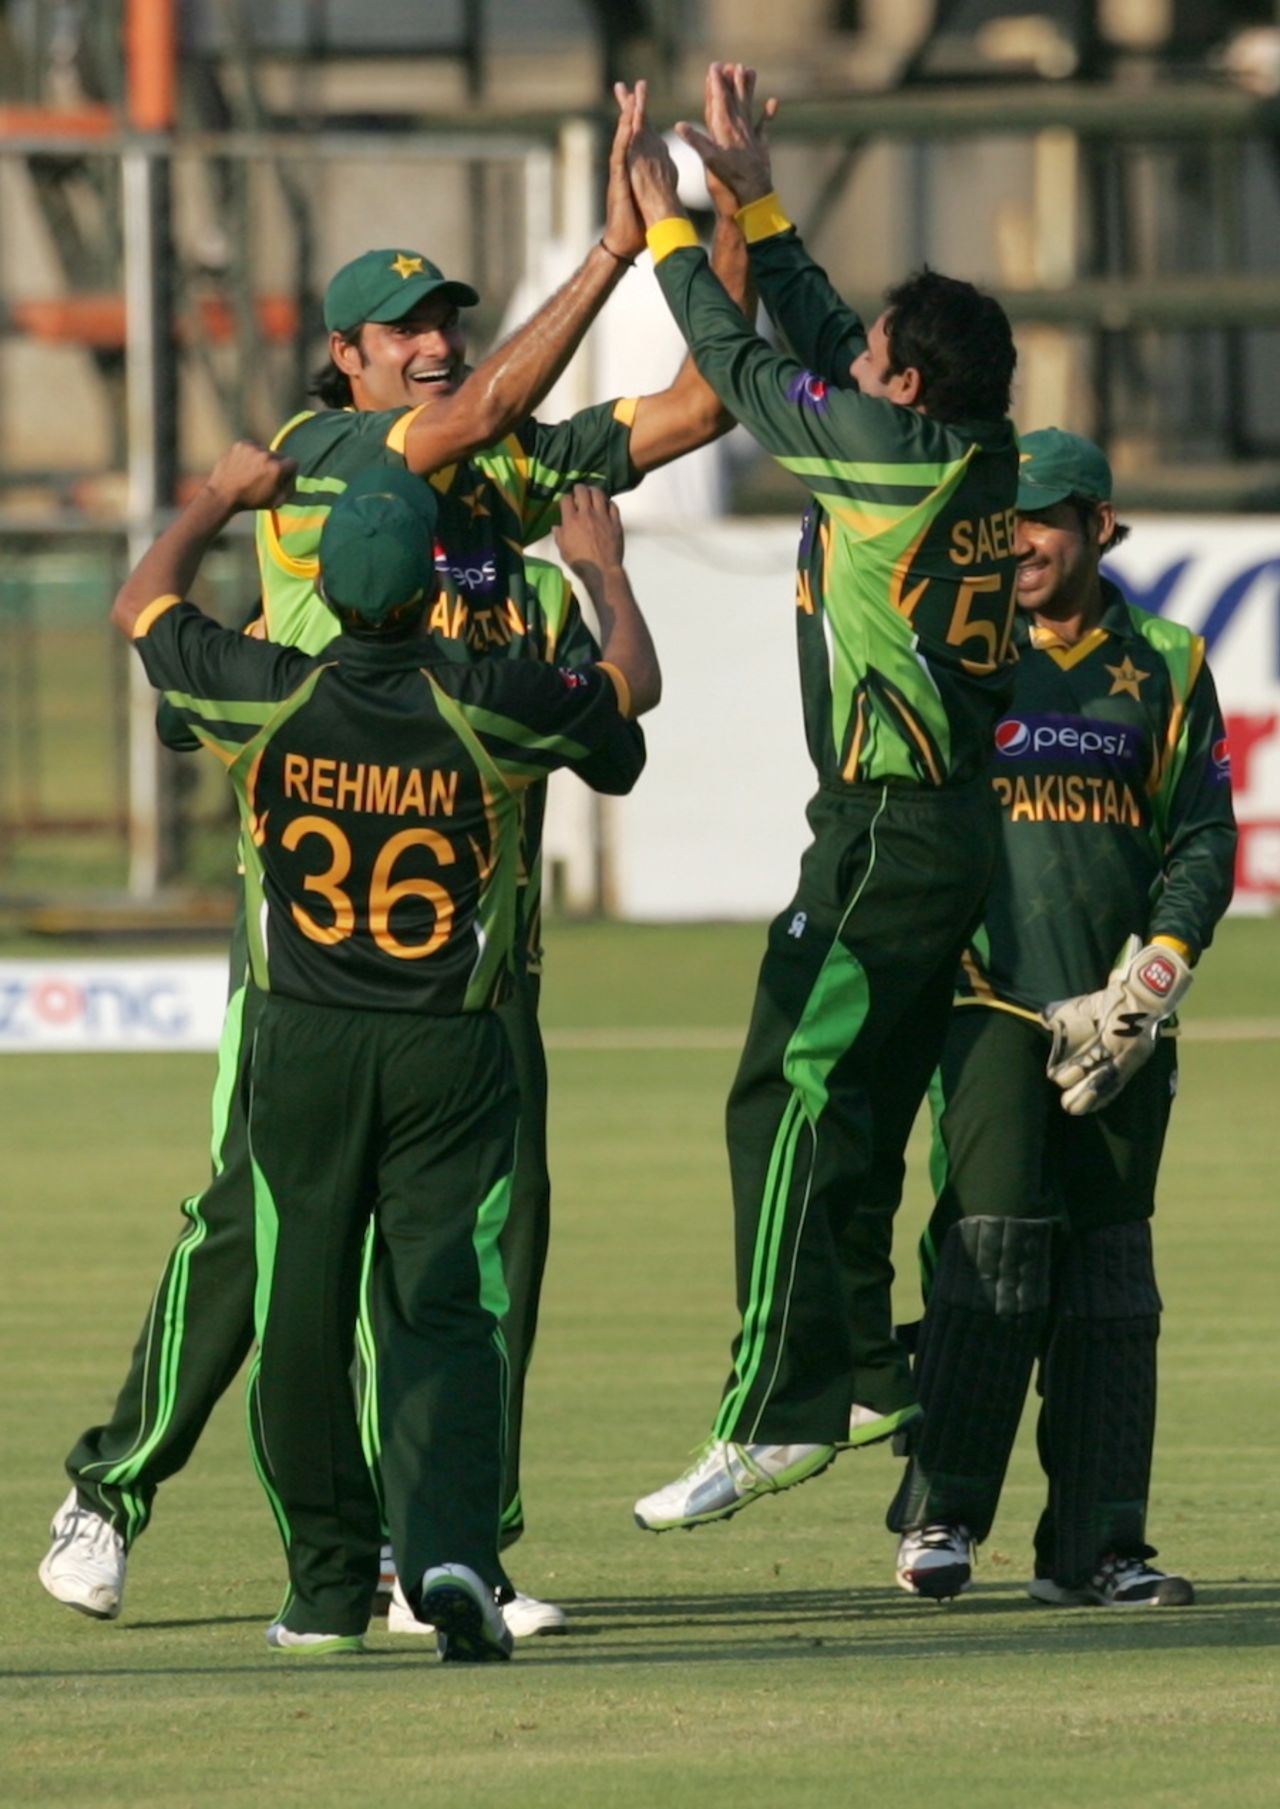 Mohammad Irfan and Saeed Ajmal celebrate a wicket with team-mates, Zimbabwe v Pakistan, 2nd ODI, Harare, August 29, 2013